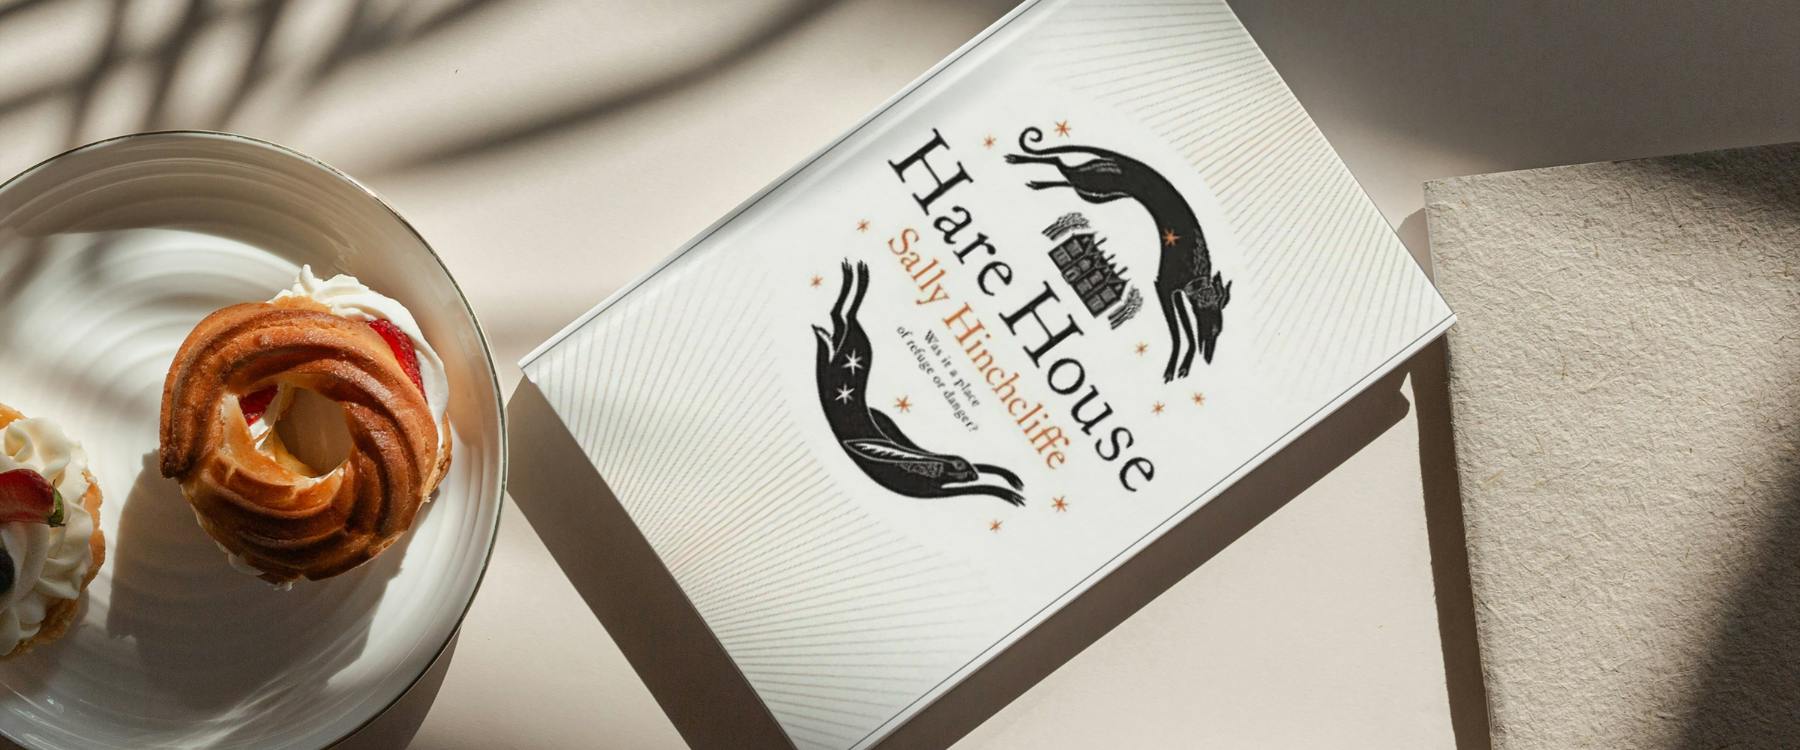 Recension Hare House av Sally Hinchcliffe